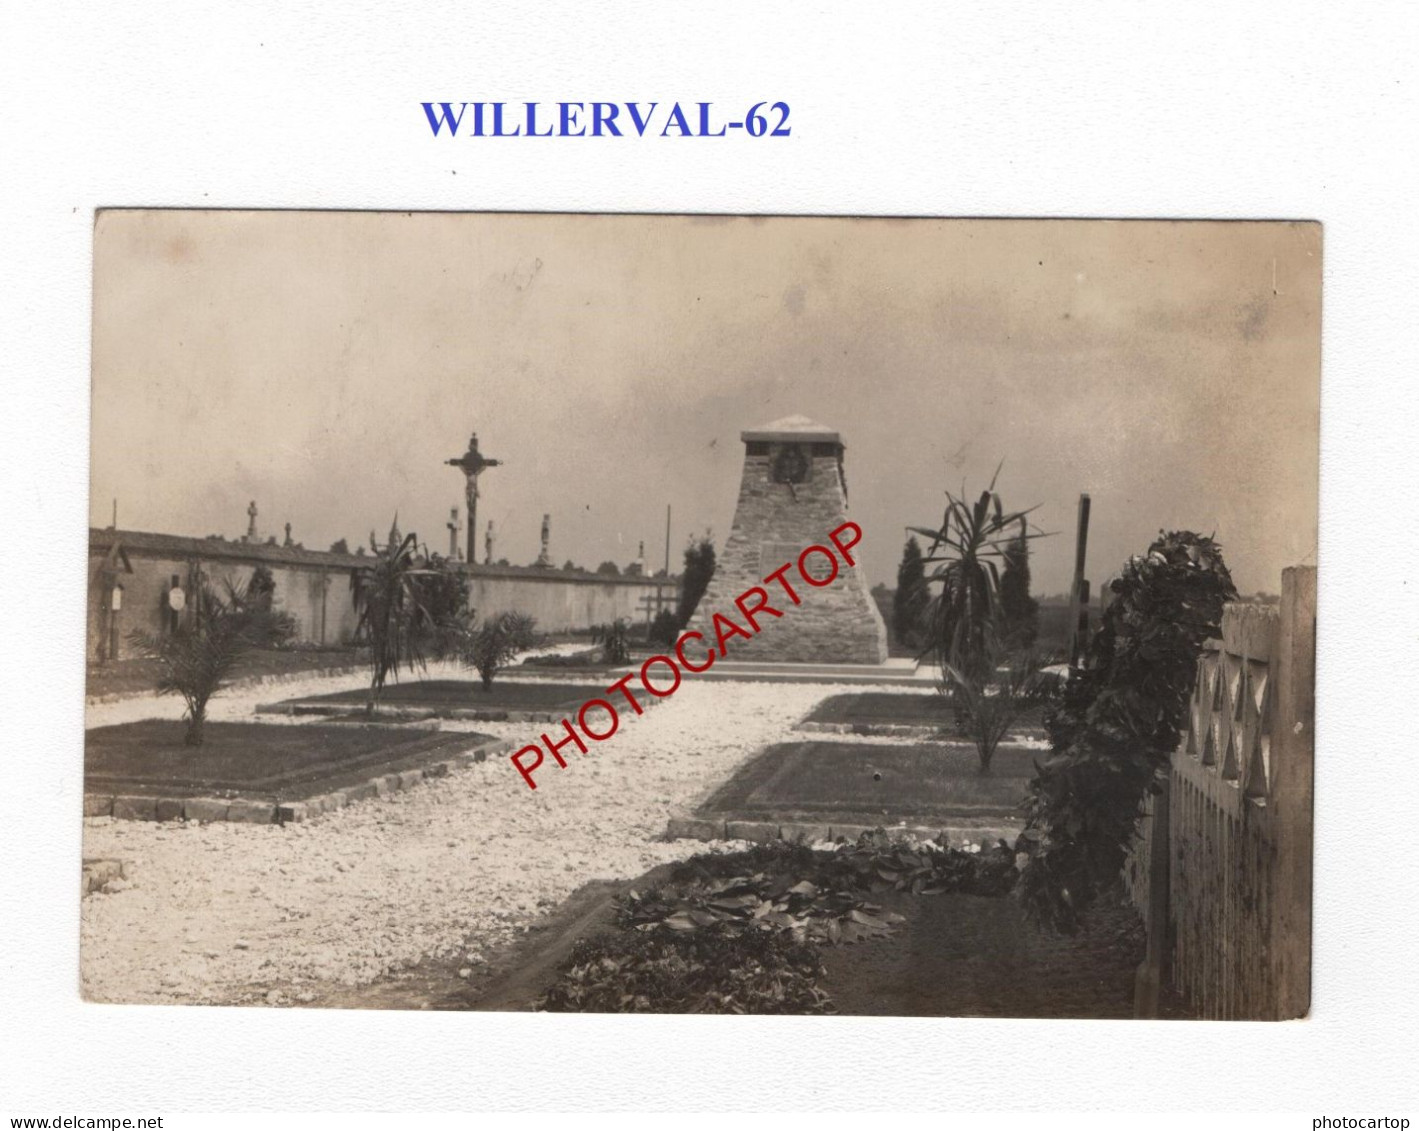 WILLERVAL-62-Monument-Cimetiere-Tombes-CARTE PHOTO Allemande-GUERRE 14-18-1 WK-MILITARIA- - Cimetières Militaires